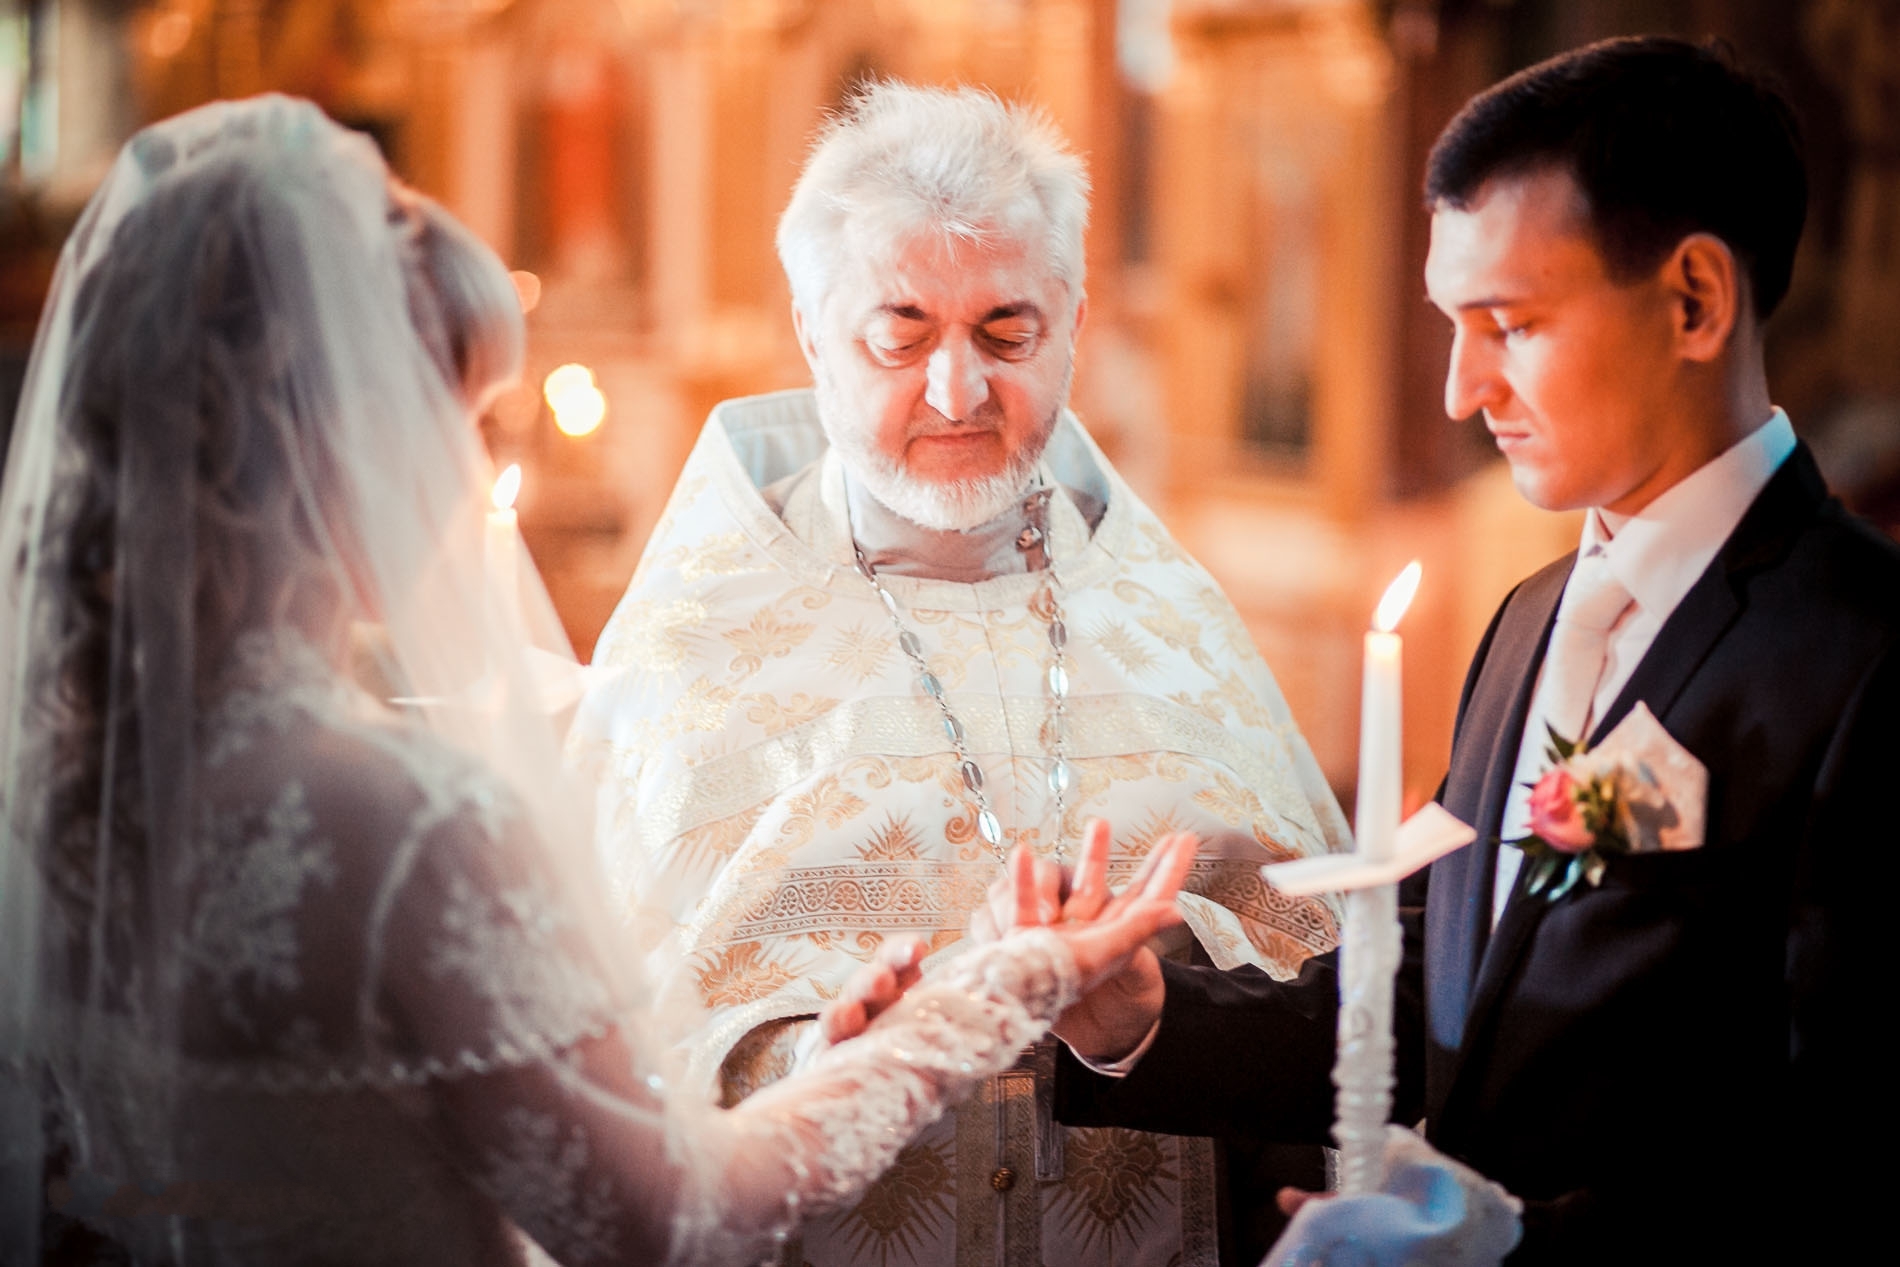 Церемония в церкви. Свадьба венчание. Свадьба в храме. Фотосессия венчания в церкви.